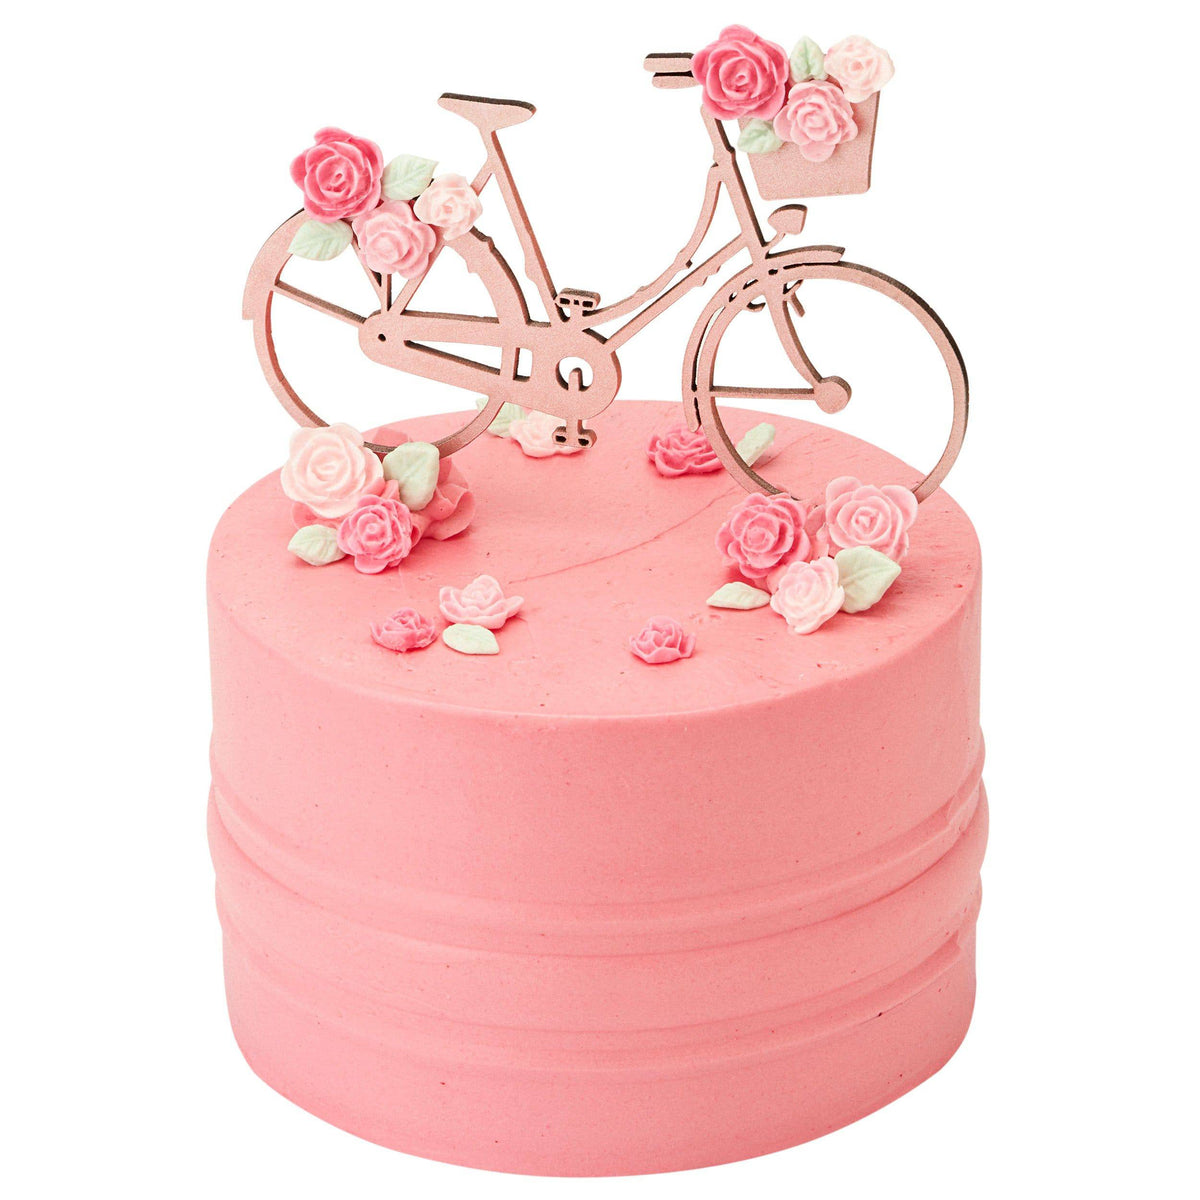 Bike cake, fondant bike | Bike cakes, Cake designs for boy, Cake